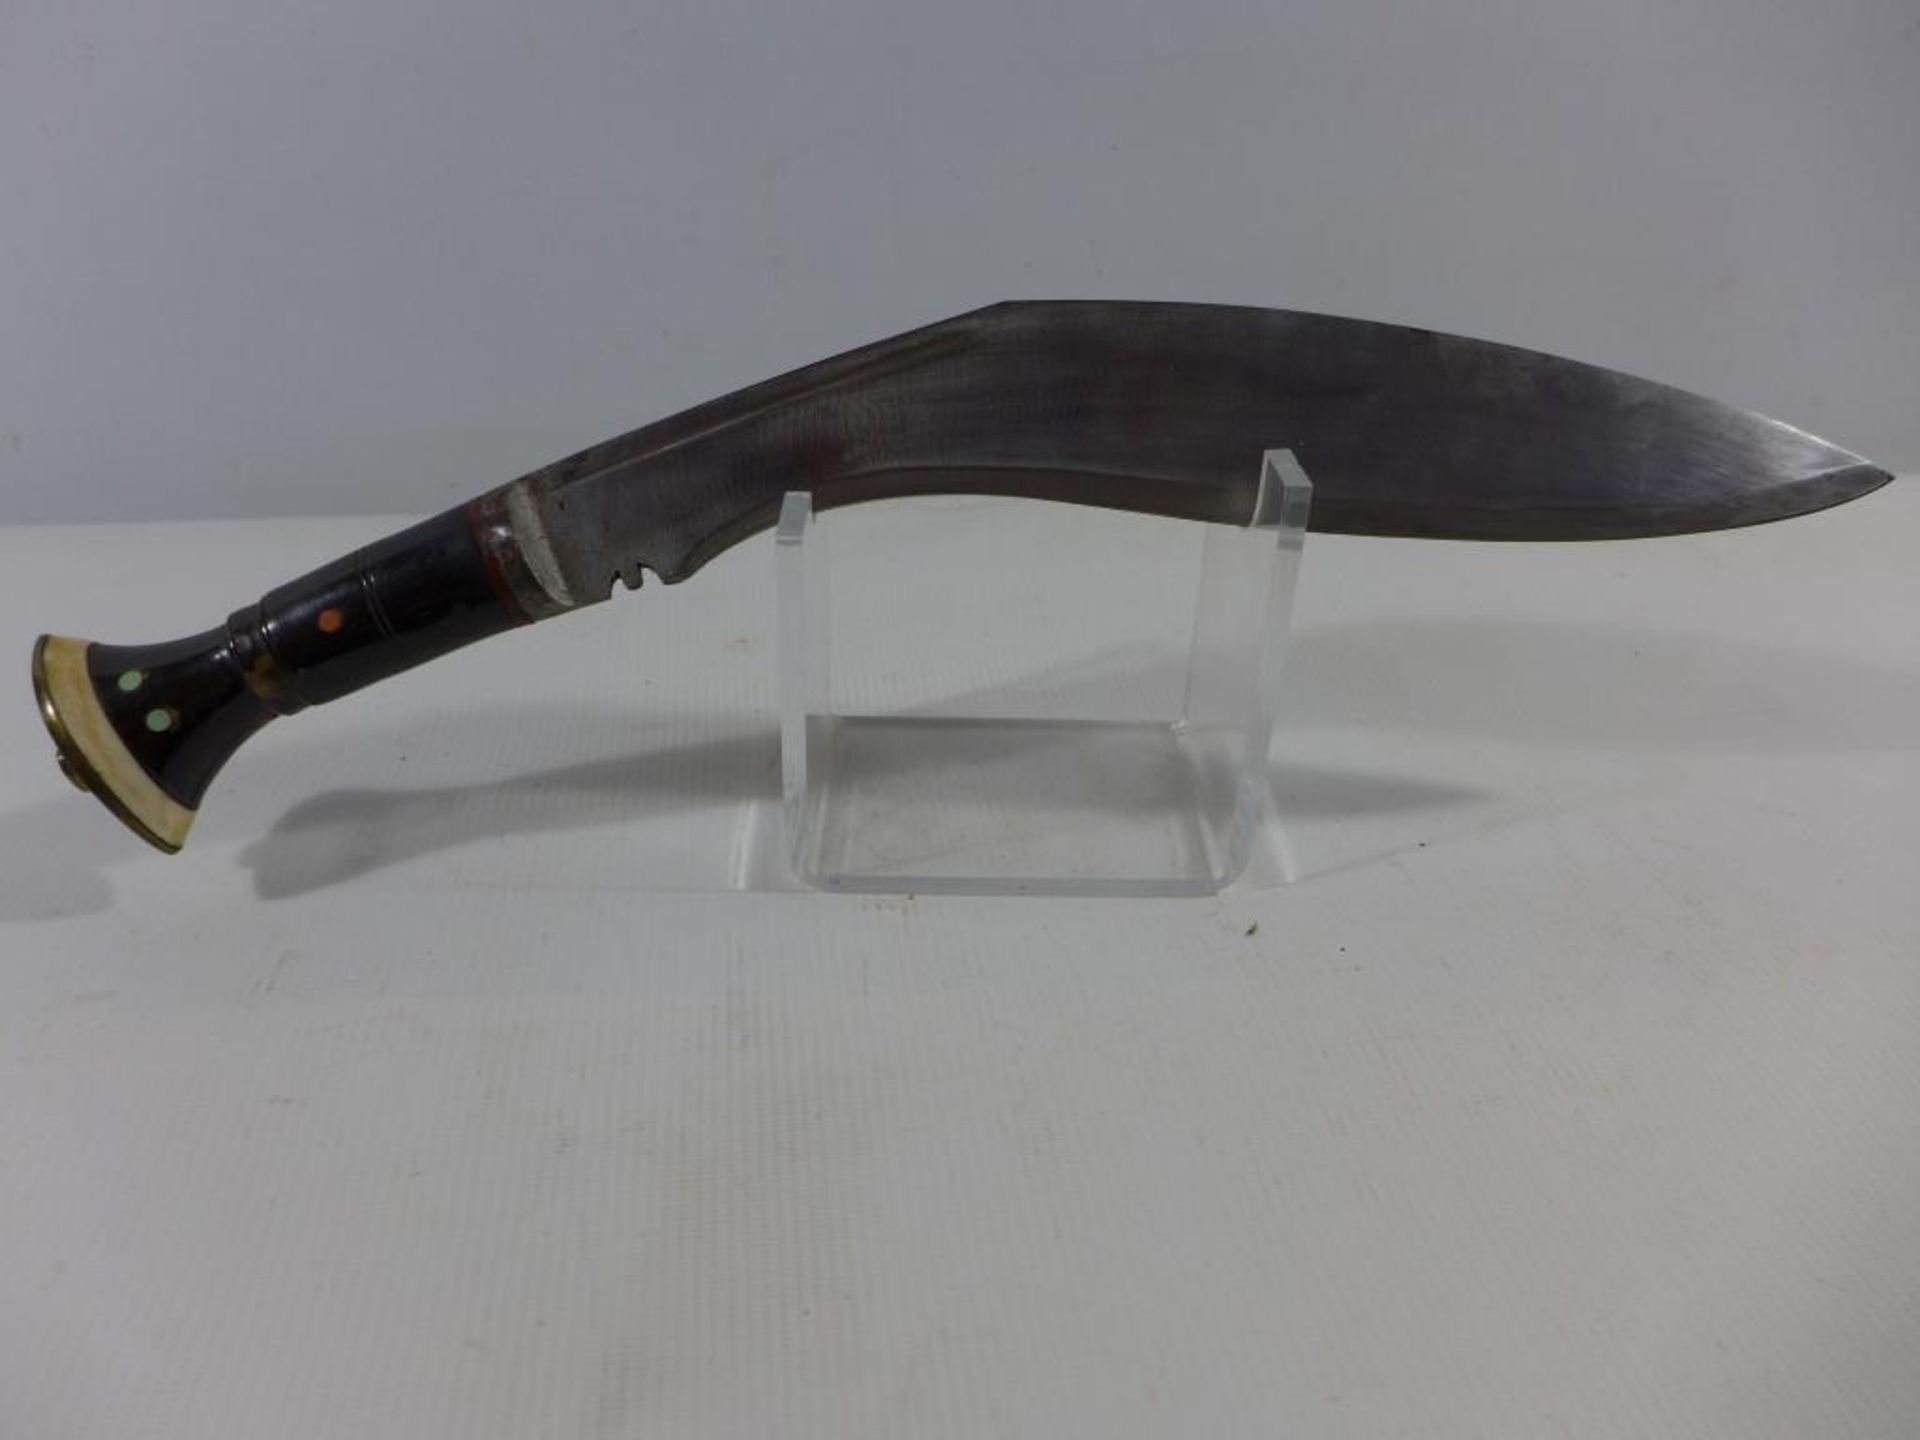 A KUKRI KNIFE, 32CM BLADE - Image 2 of 3